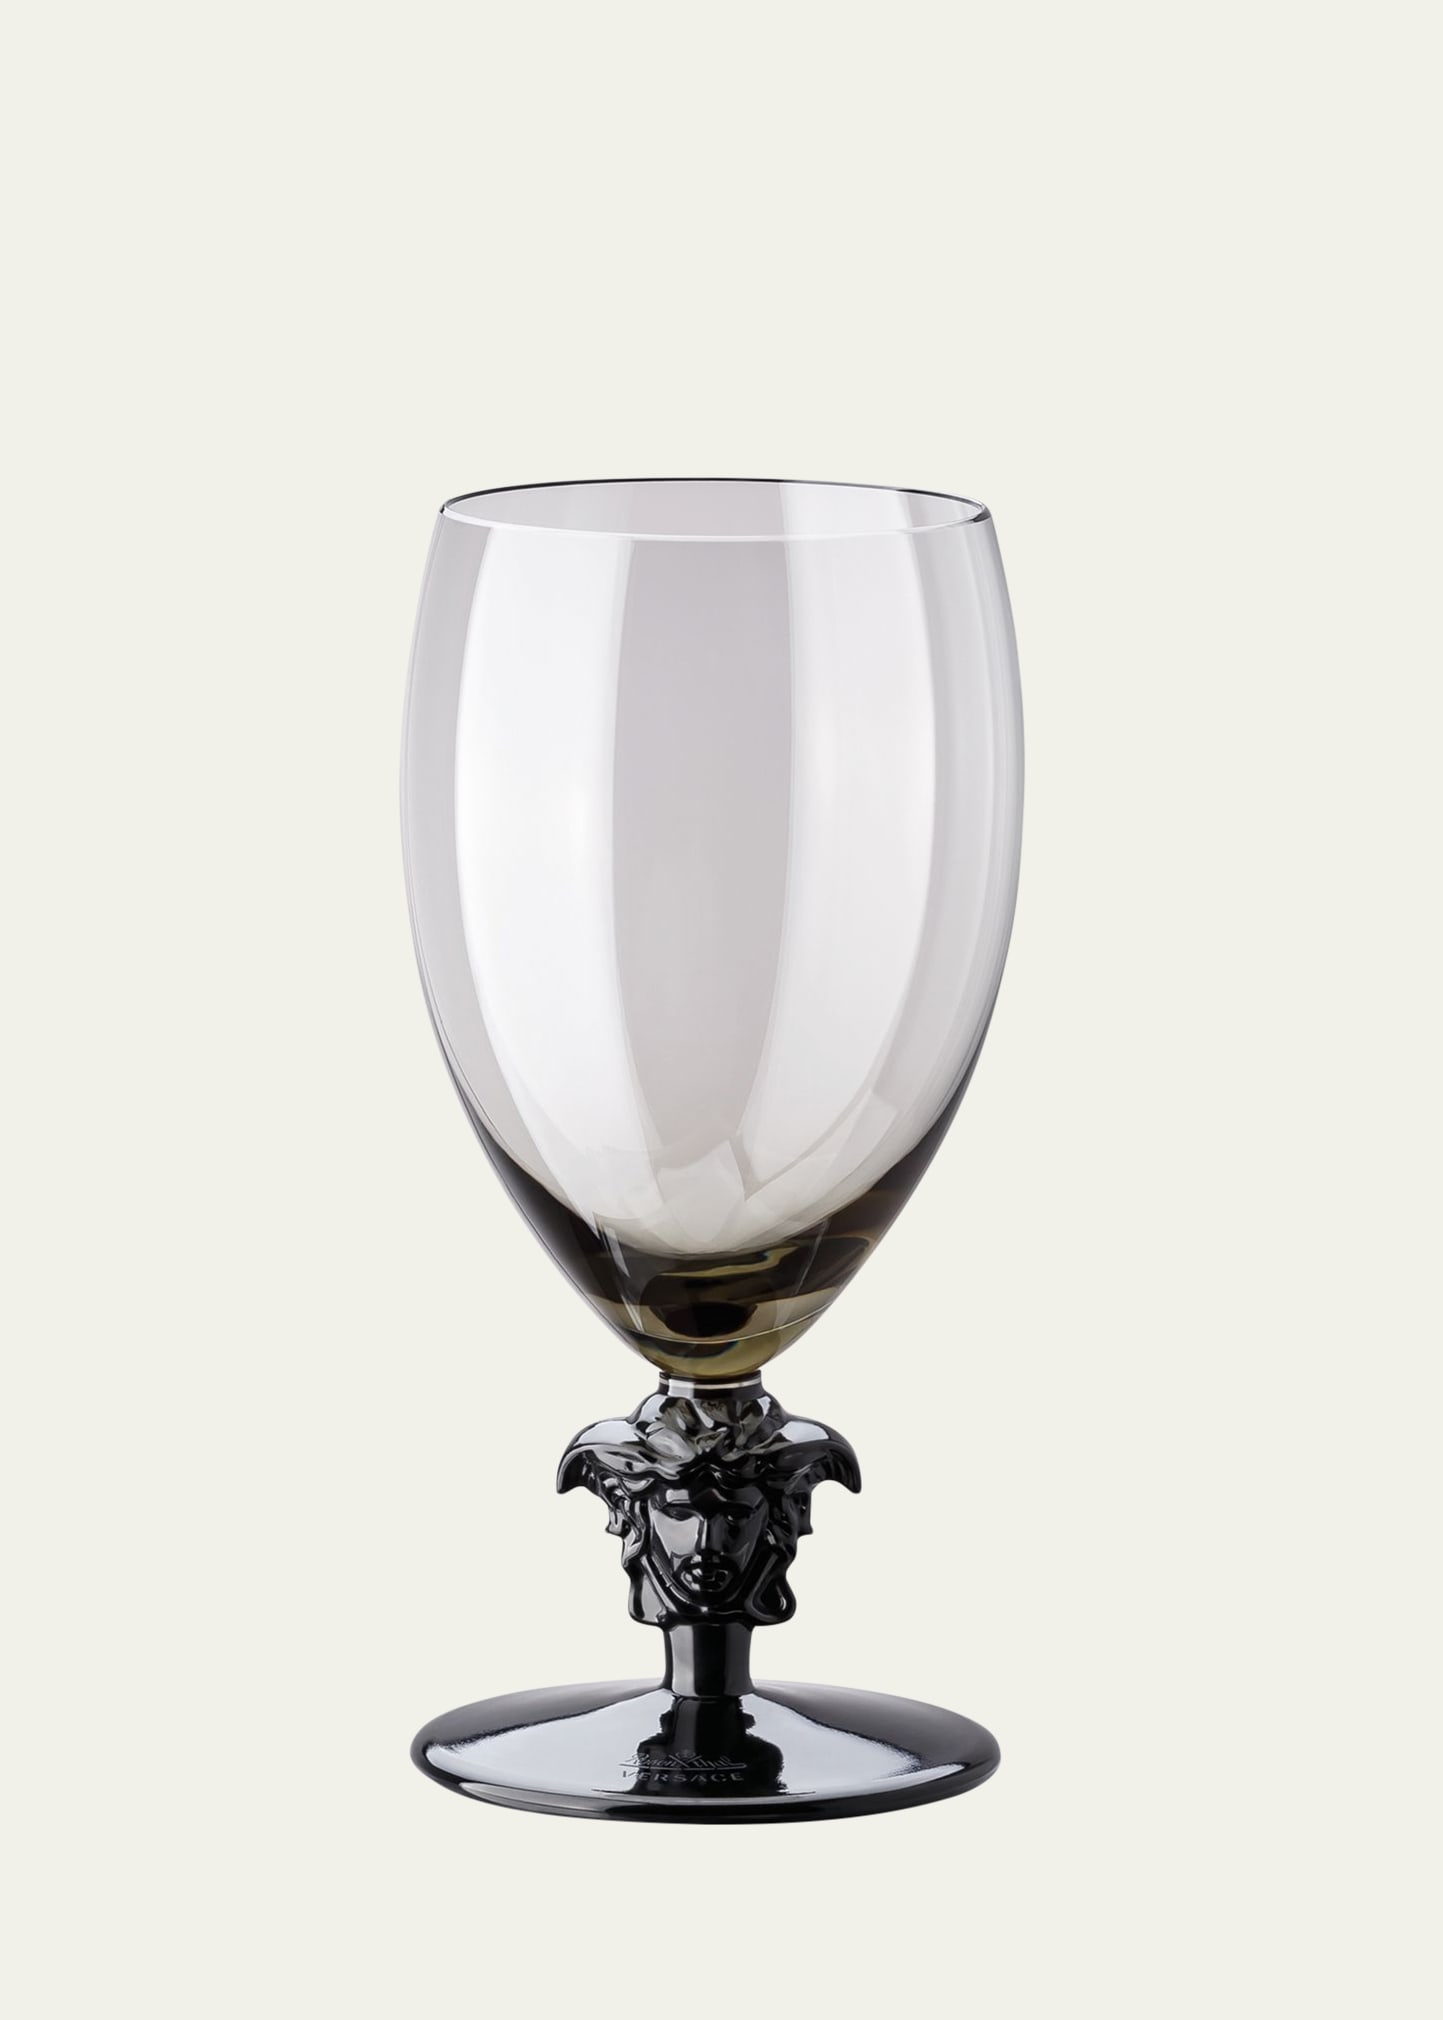 Medusa Lumiere Short Stem Haze White Wine Glasses, Set of 2